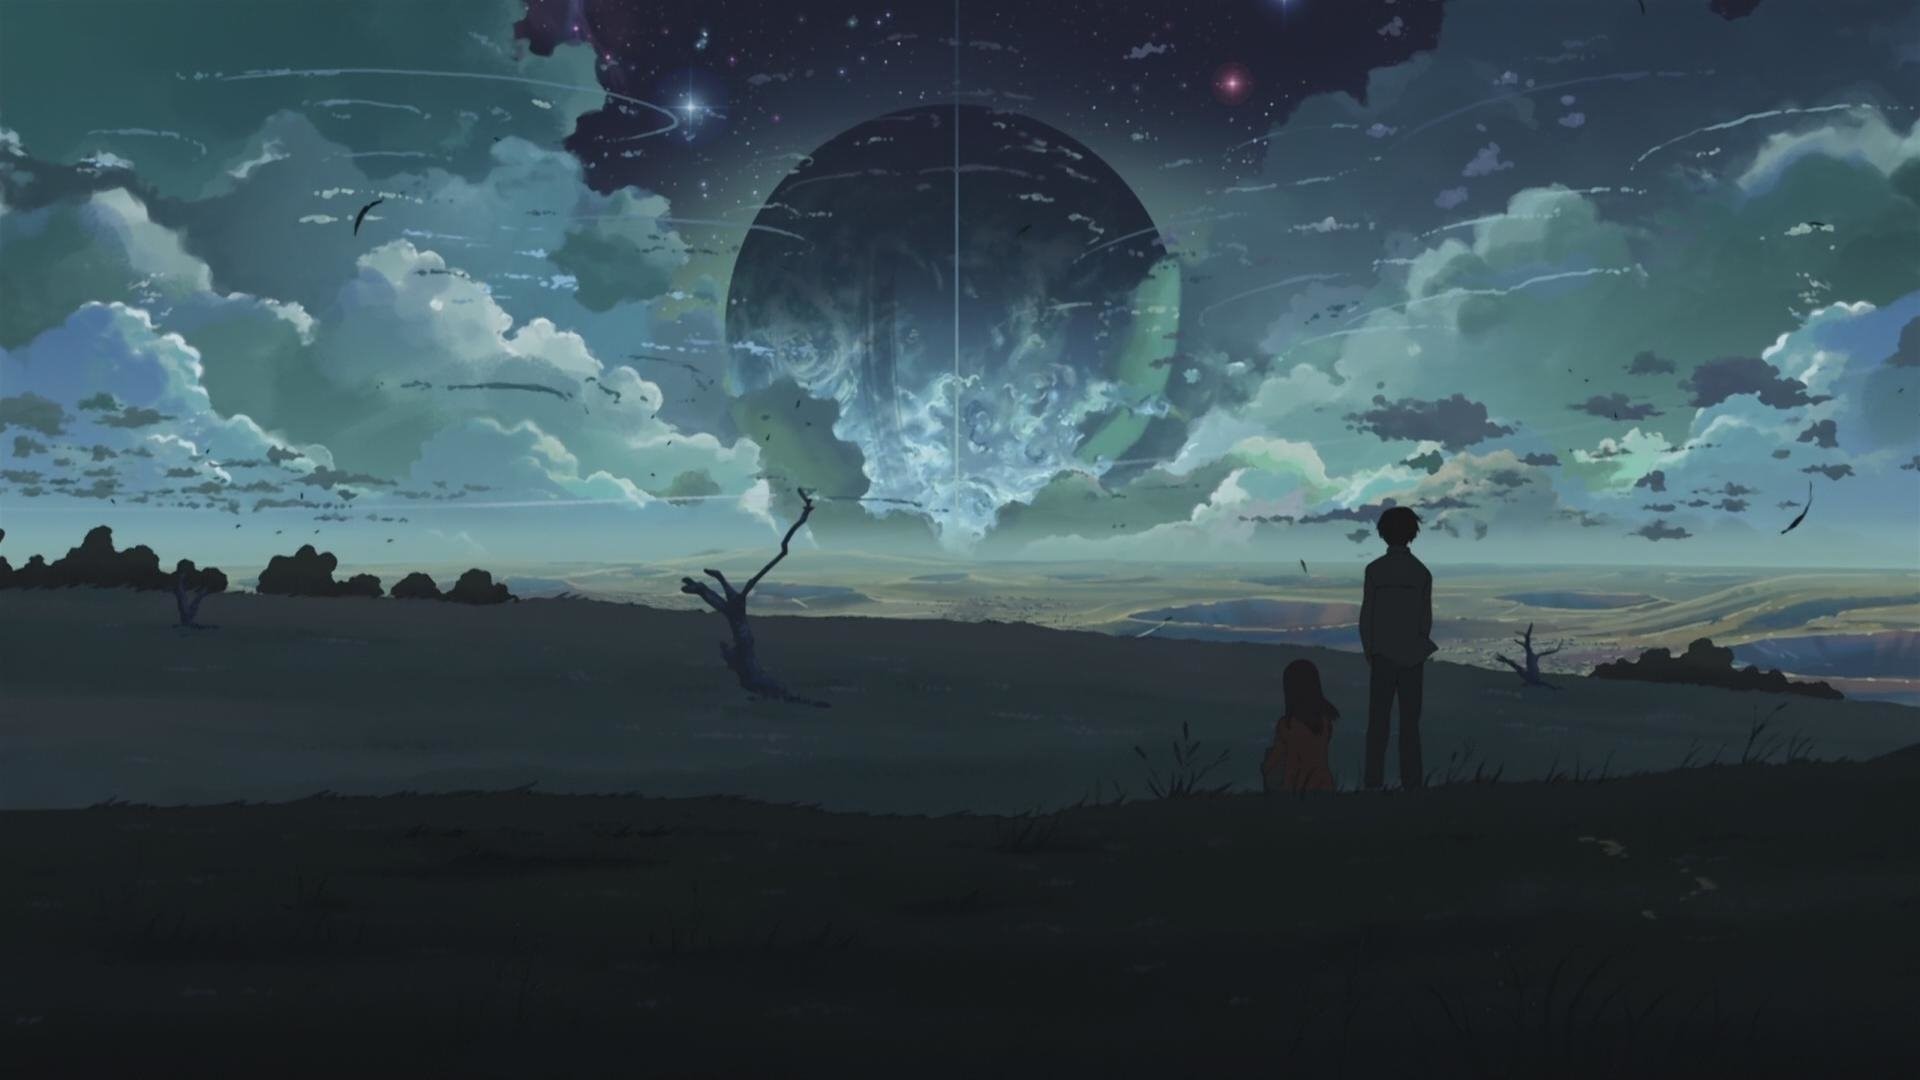 makoto wallpaper,sky,atmosphere,illustration,space,cg artwork